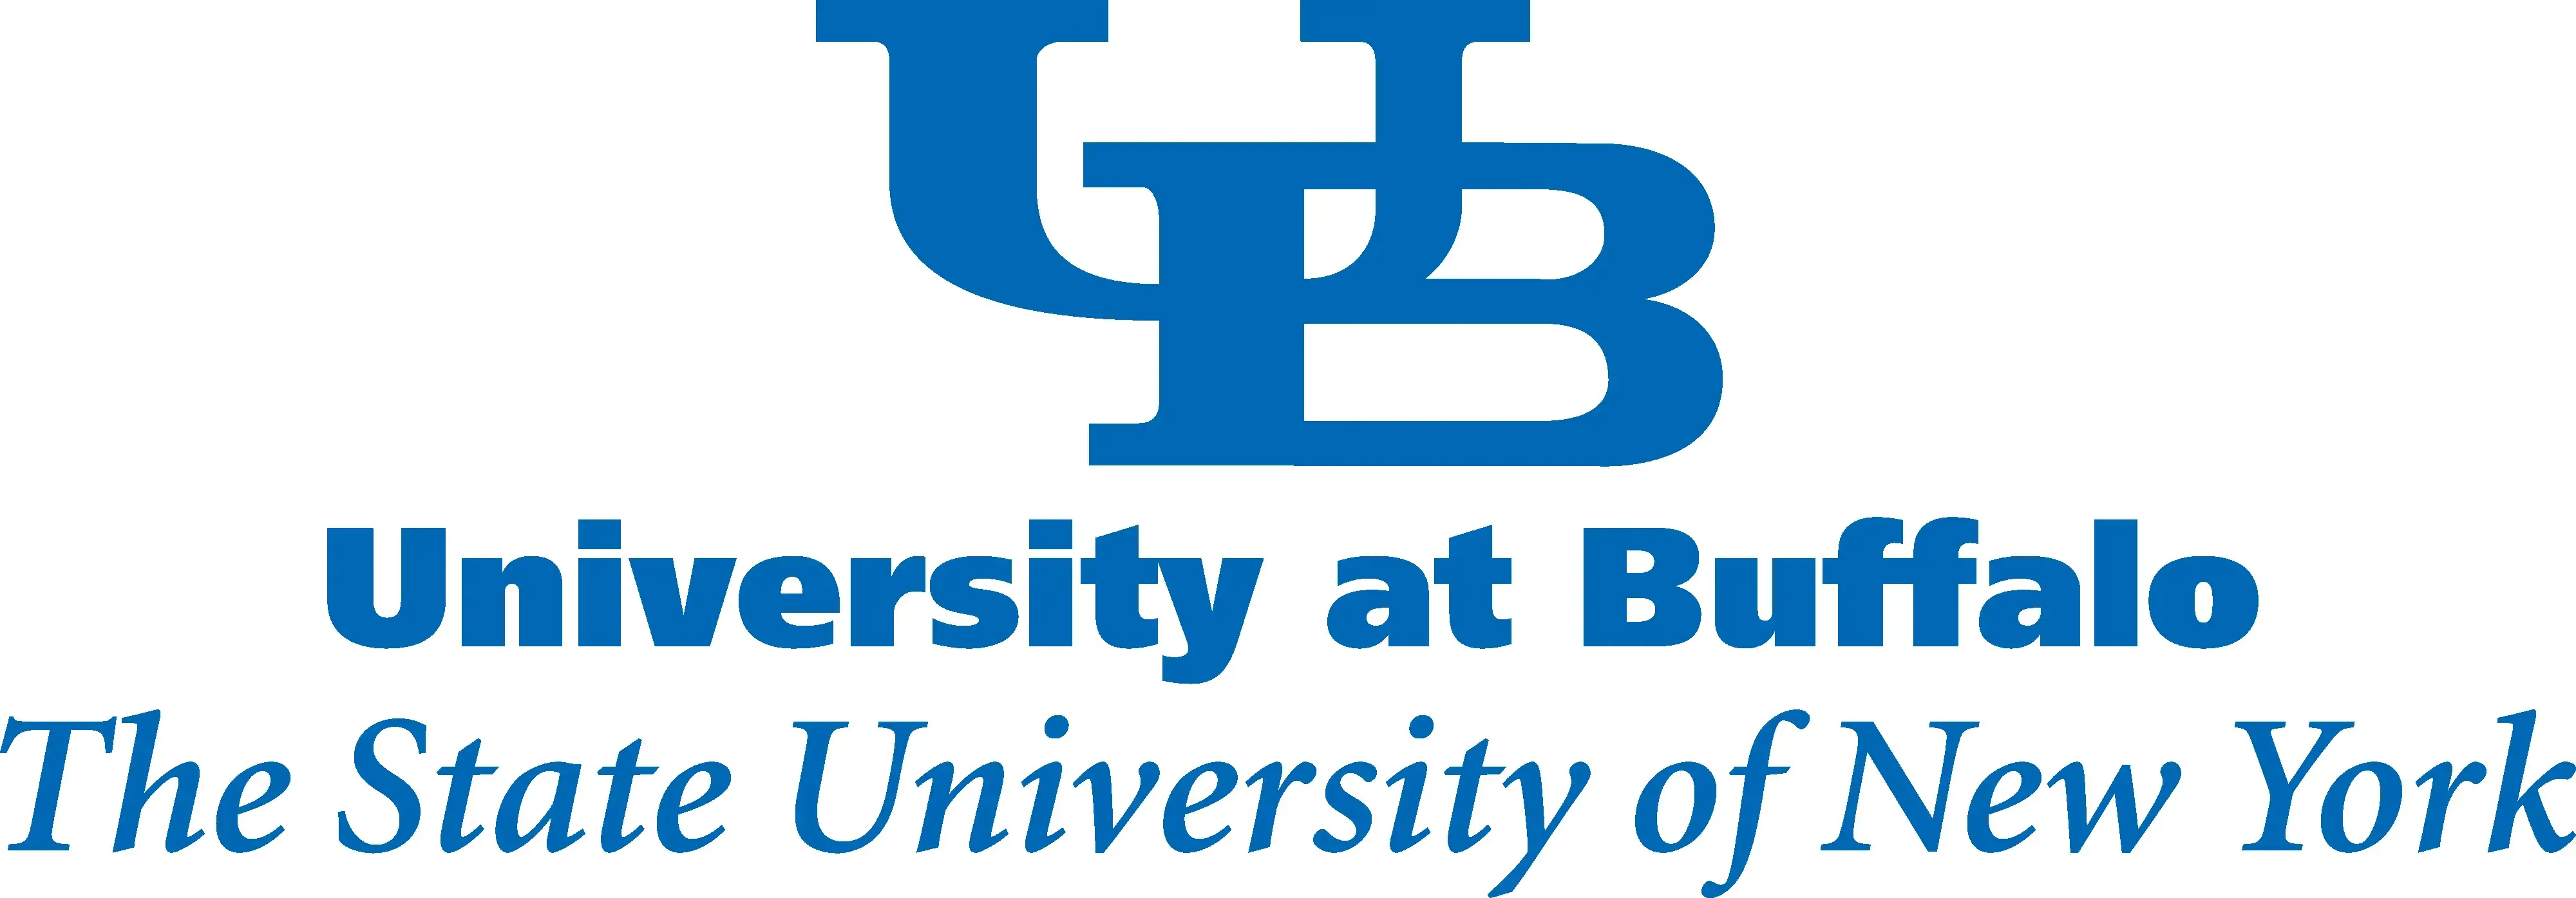 university-at-buffalo-logo-white